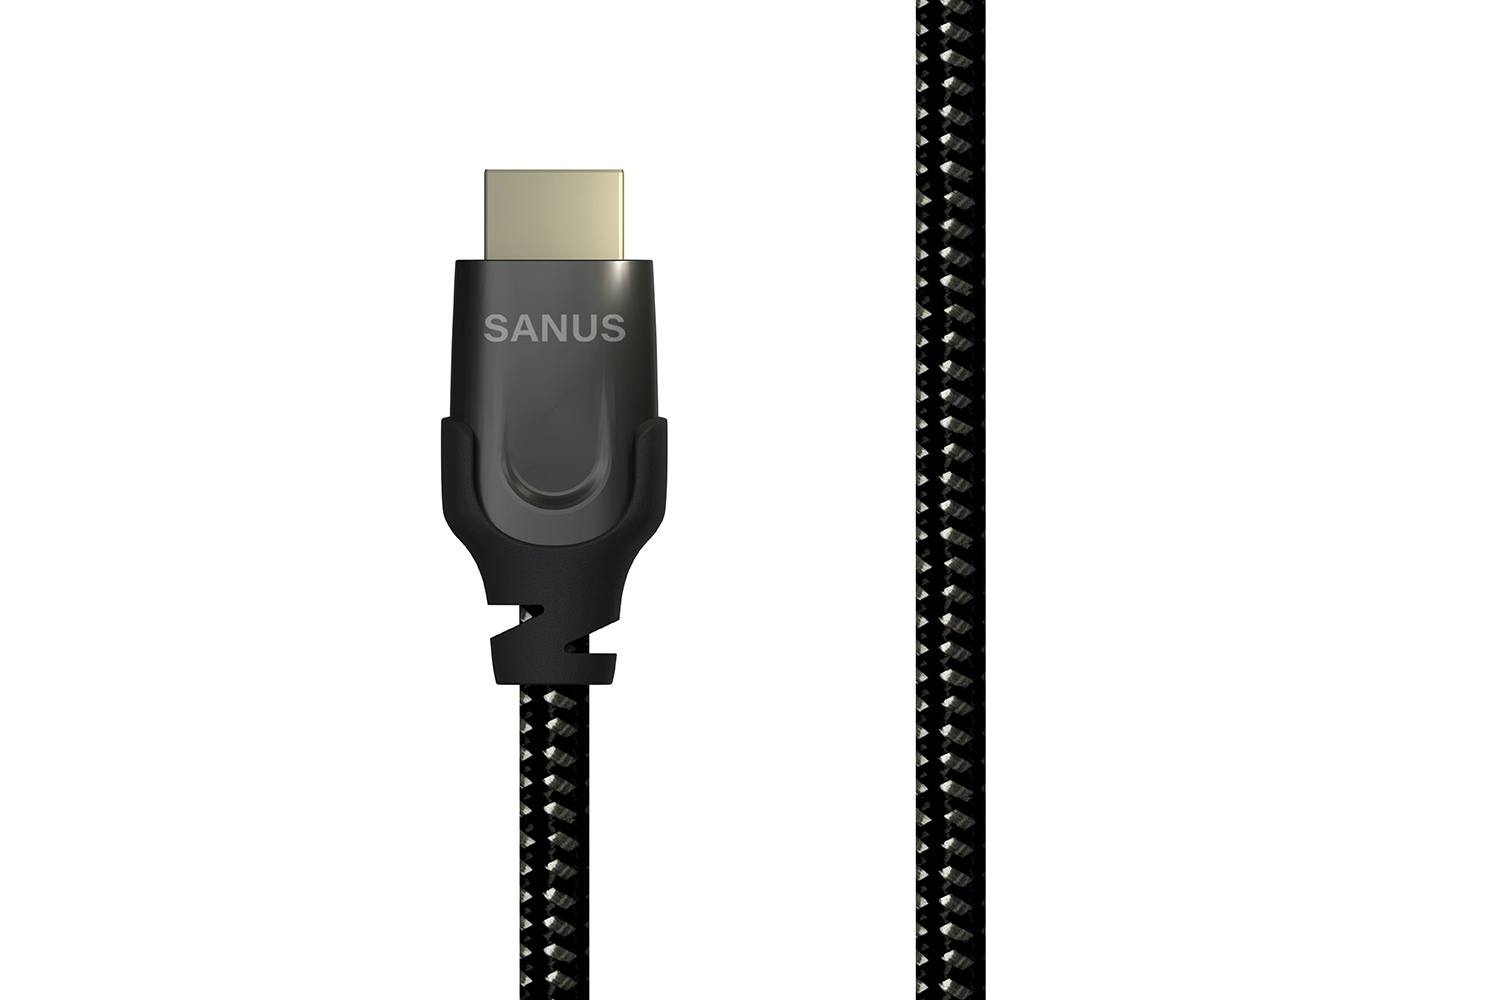 Cable HDMI 3 metros – Compuservices